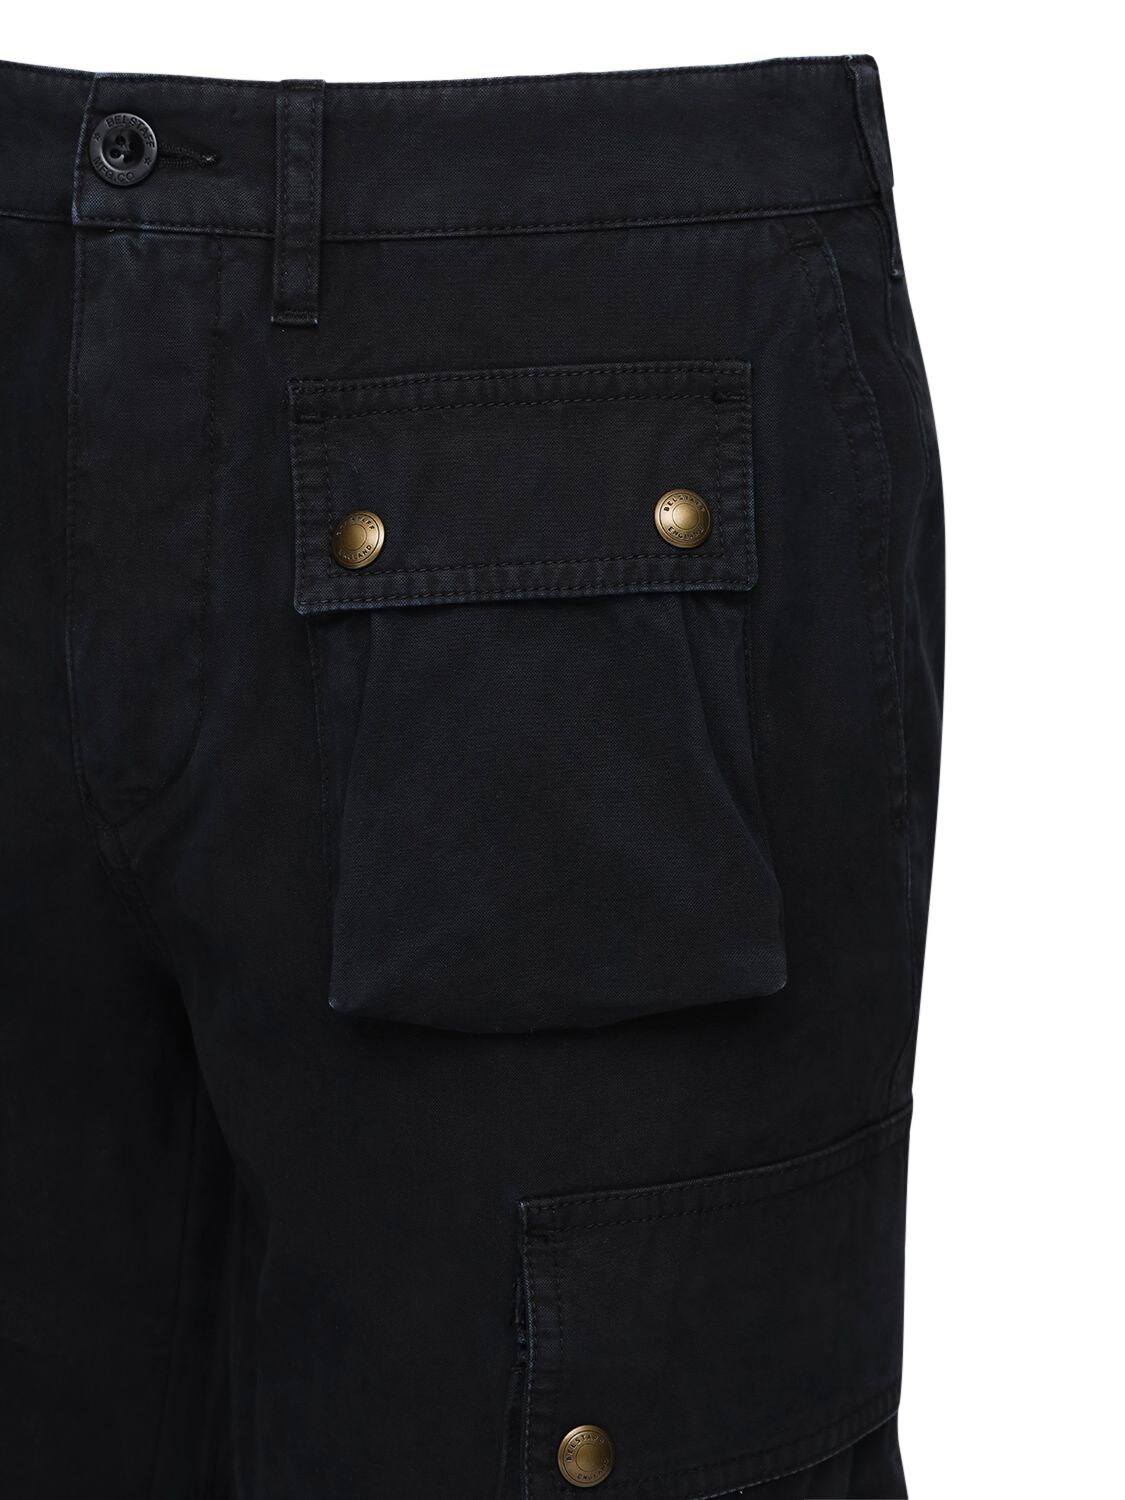 Belstaff Trialmaster Black Cotton Cargo Trousers | ModeSens